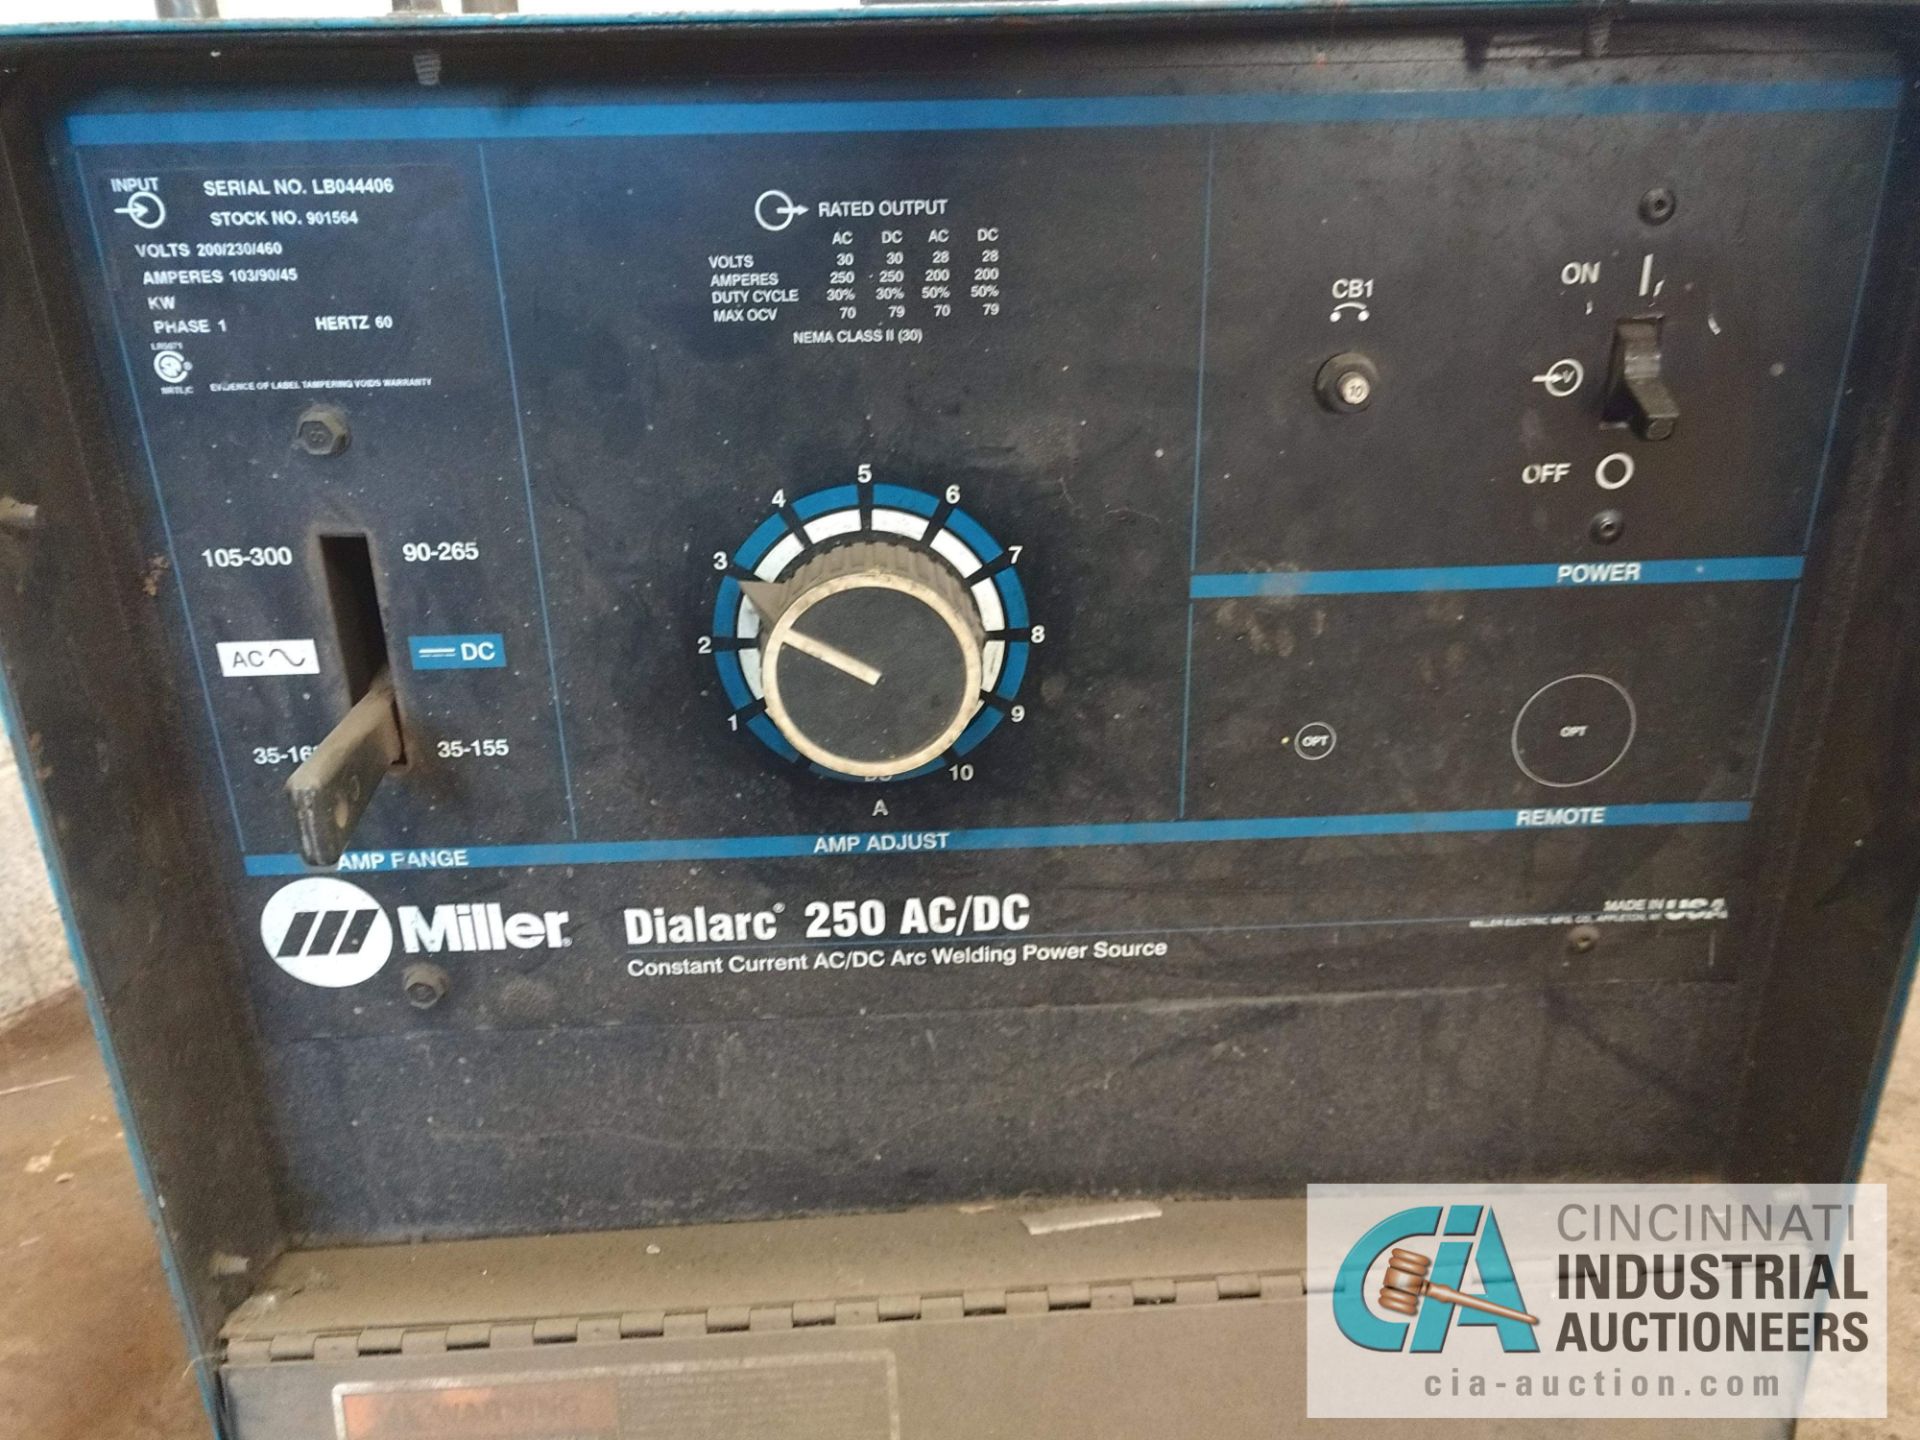 MILLER DIALARC 250 AC/DC WELDER - $20.00 Rigging Fee Due to Onsite Rigger - Located in Toledo, Ohio - Image 2 of 3